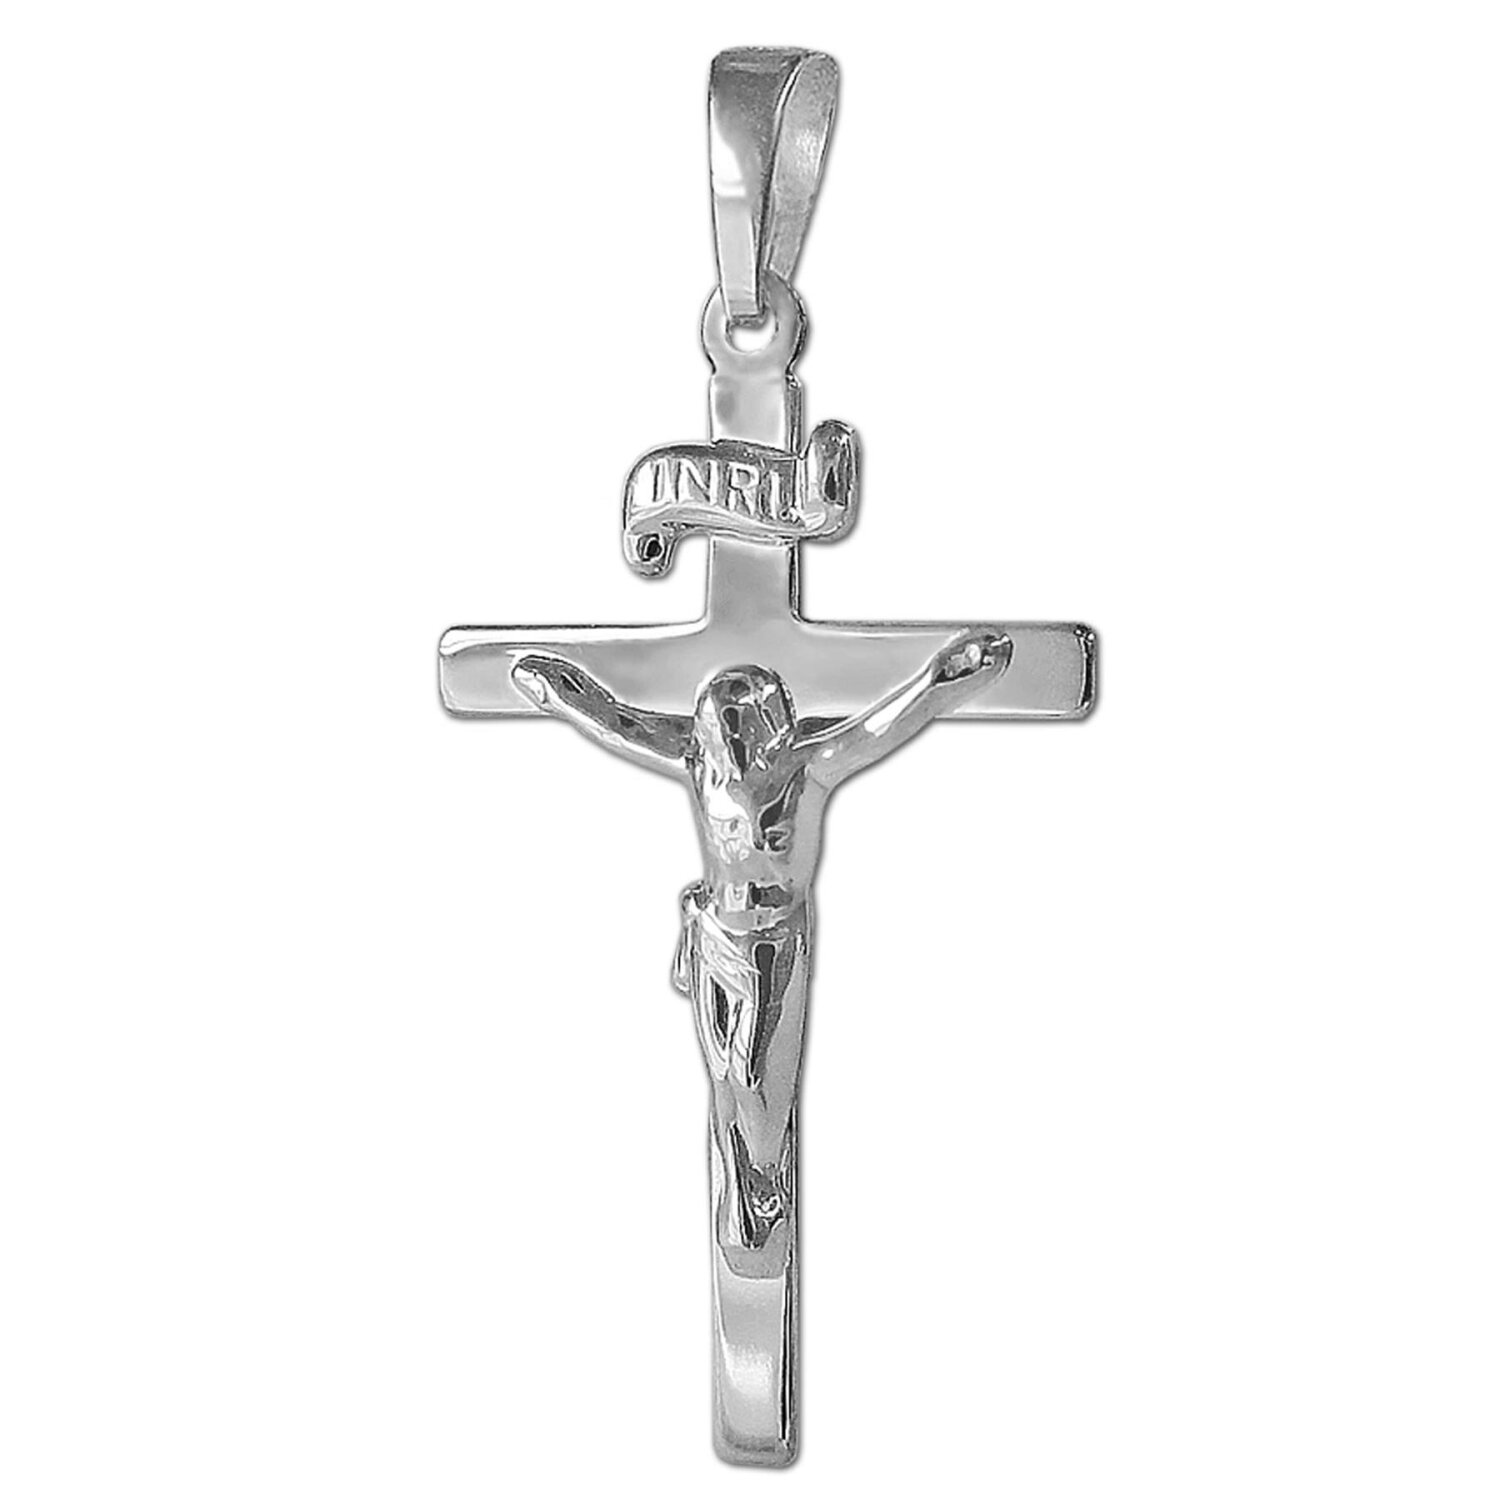 Silberner Anh&auml;nger Jesus Kreuz 25 mm INRI flache Form gl&auml;nzend Echt Silber 925